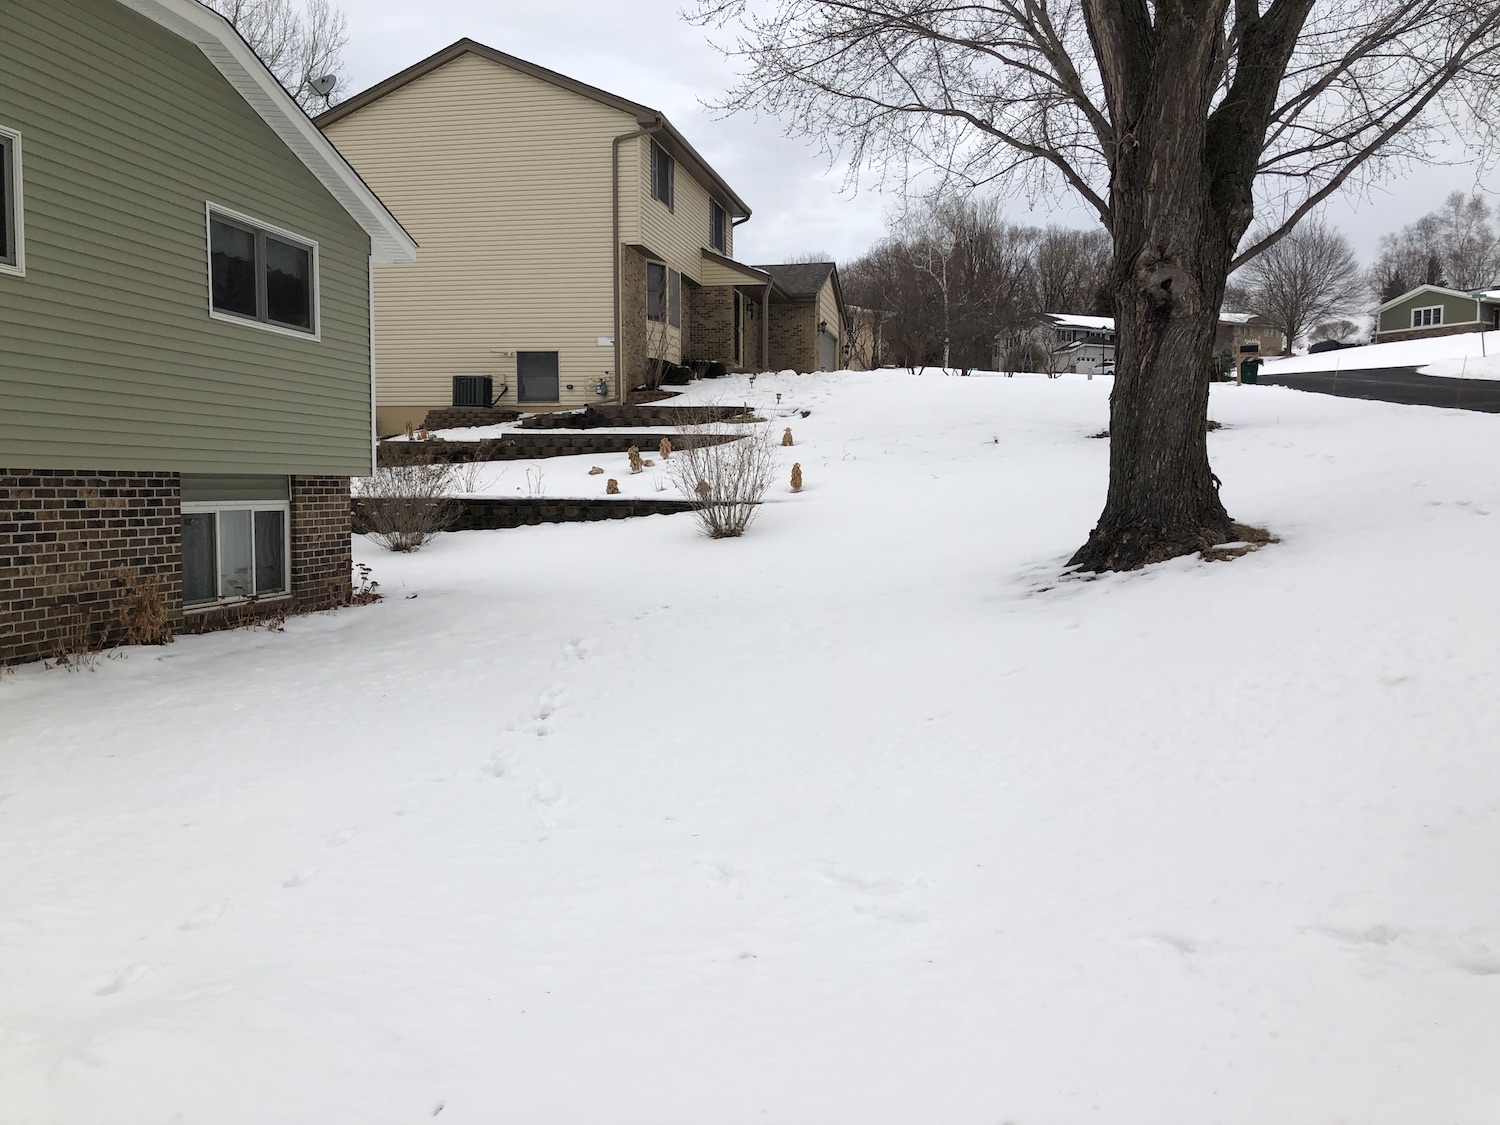 Cruncy icy groundcover in Minnesota